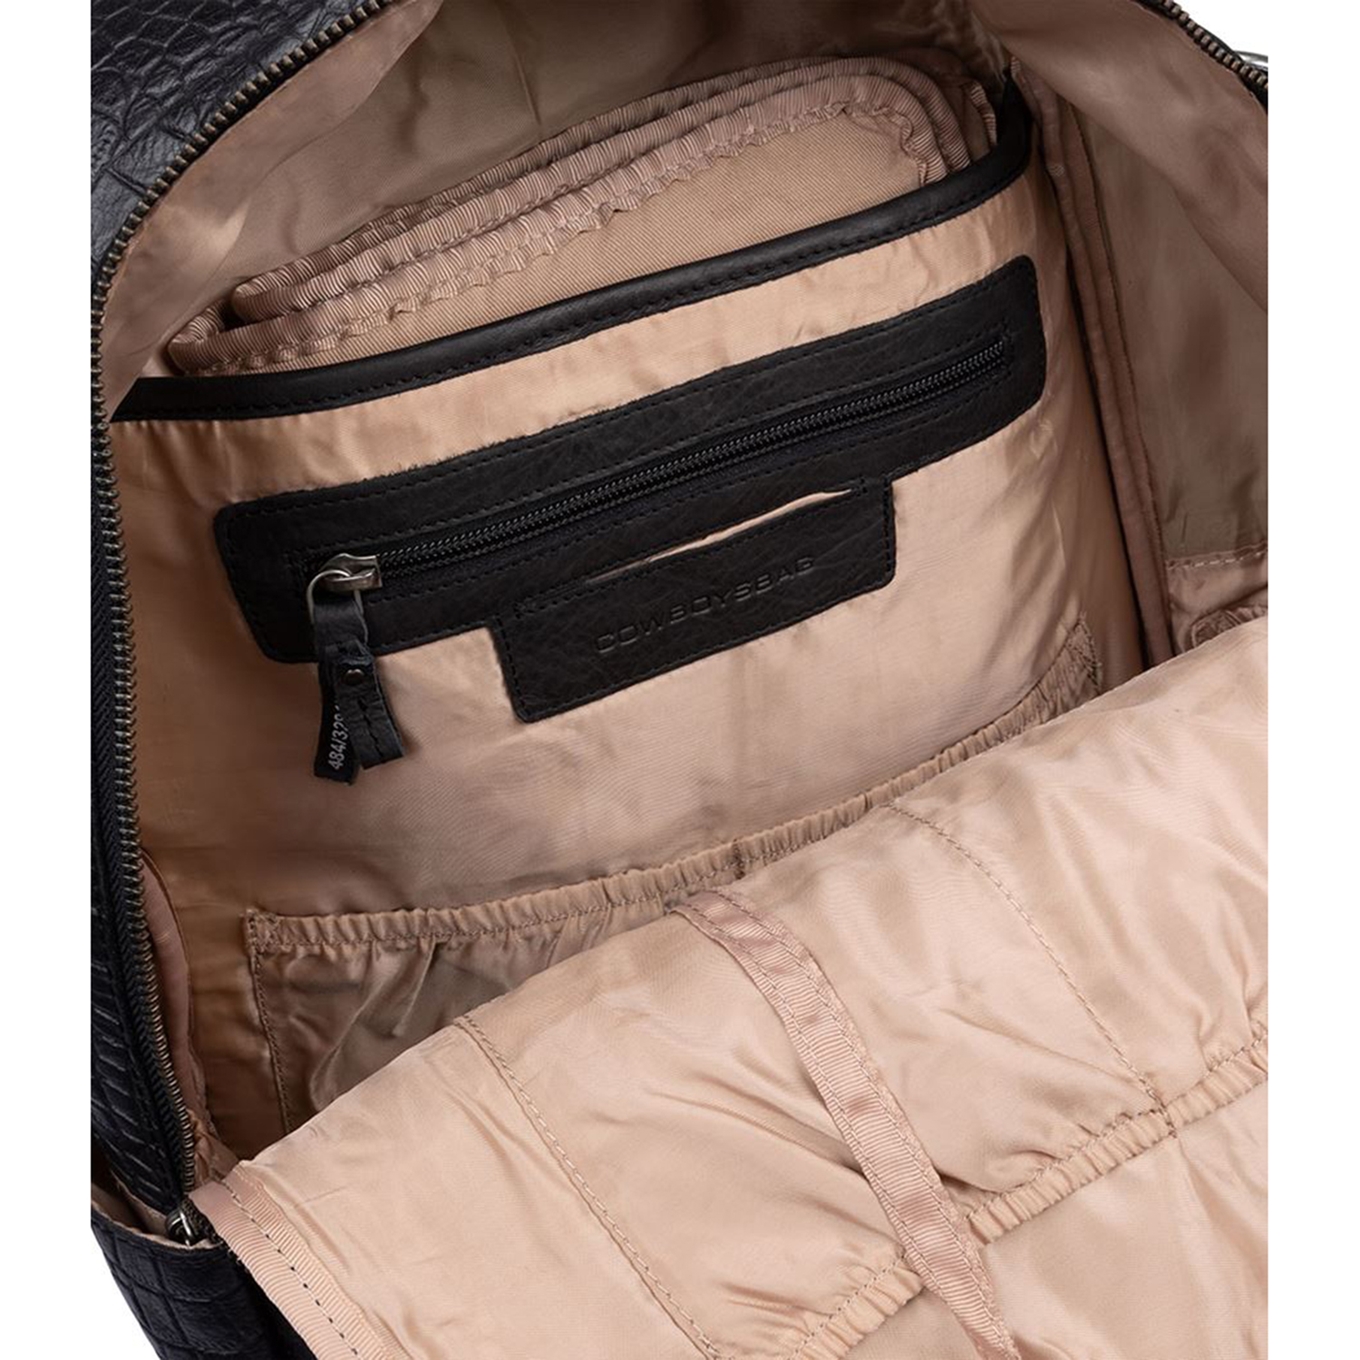 moord Verzending lawaai Cowboysbag Diaper Bag Huyton croco black | Travelbags.nl